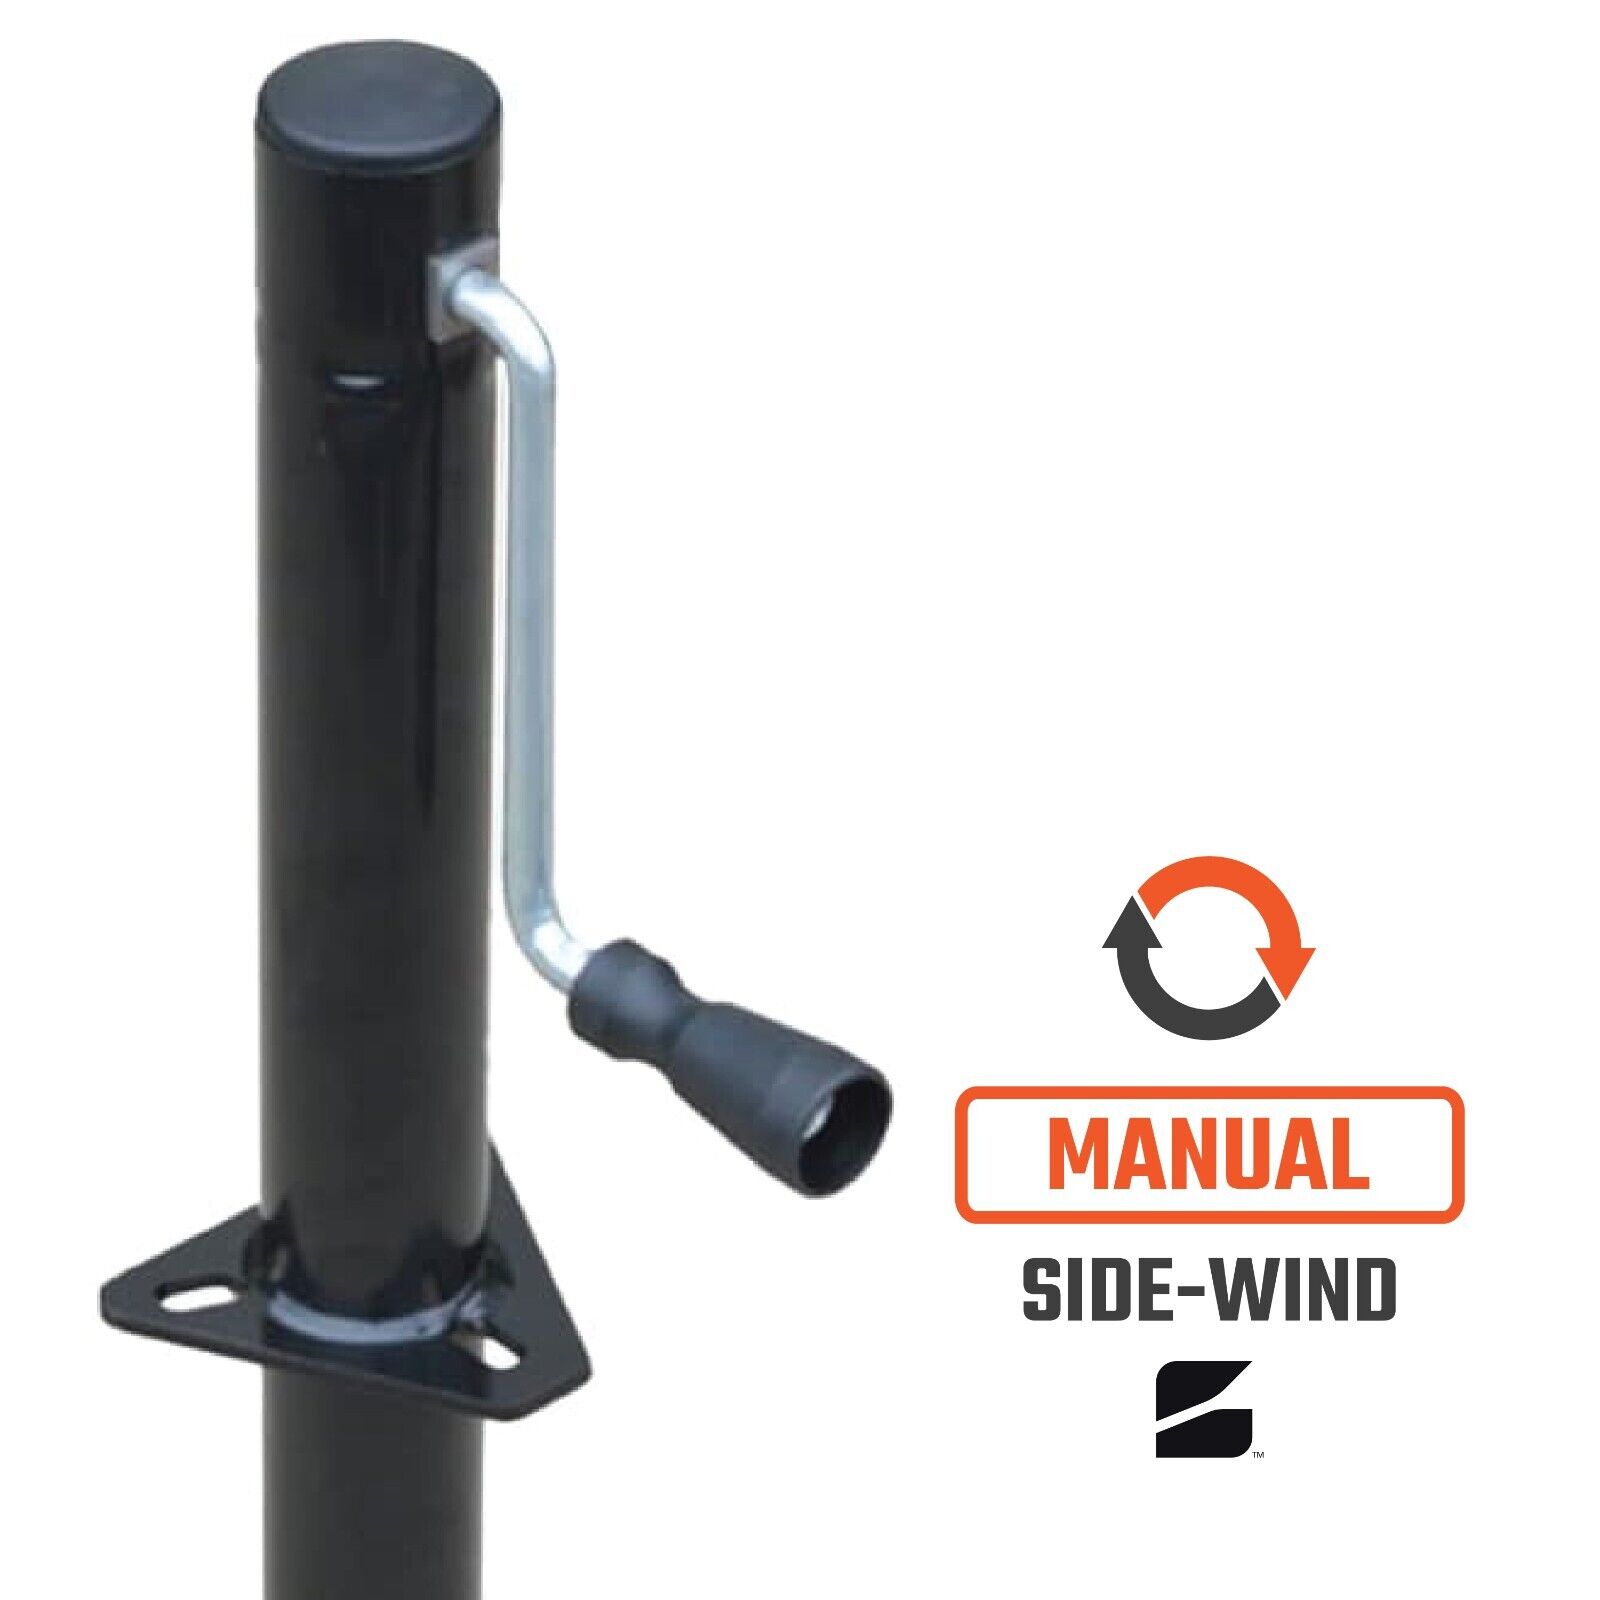 Trailer Jack Pro Series Manual Sidewind 5000 lb Capacity